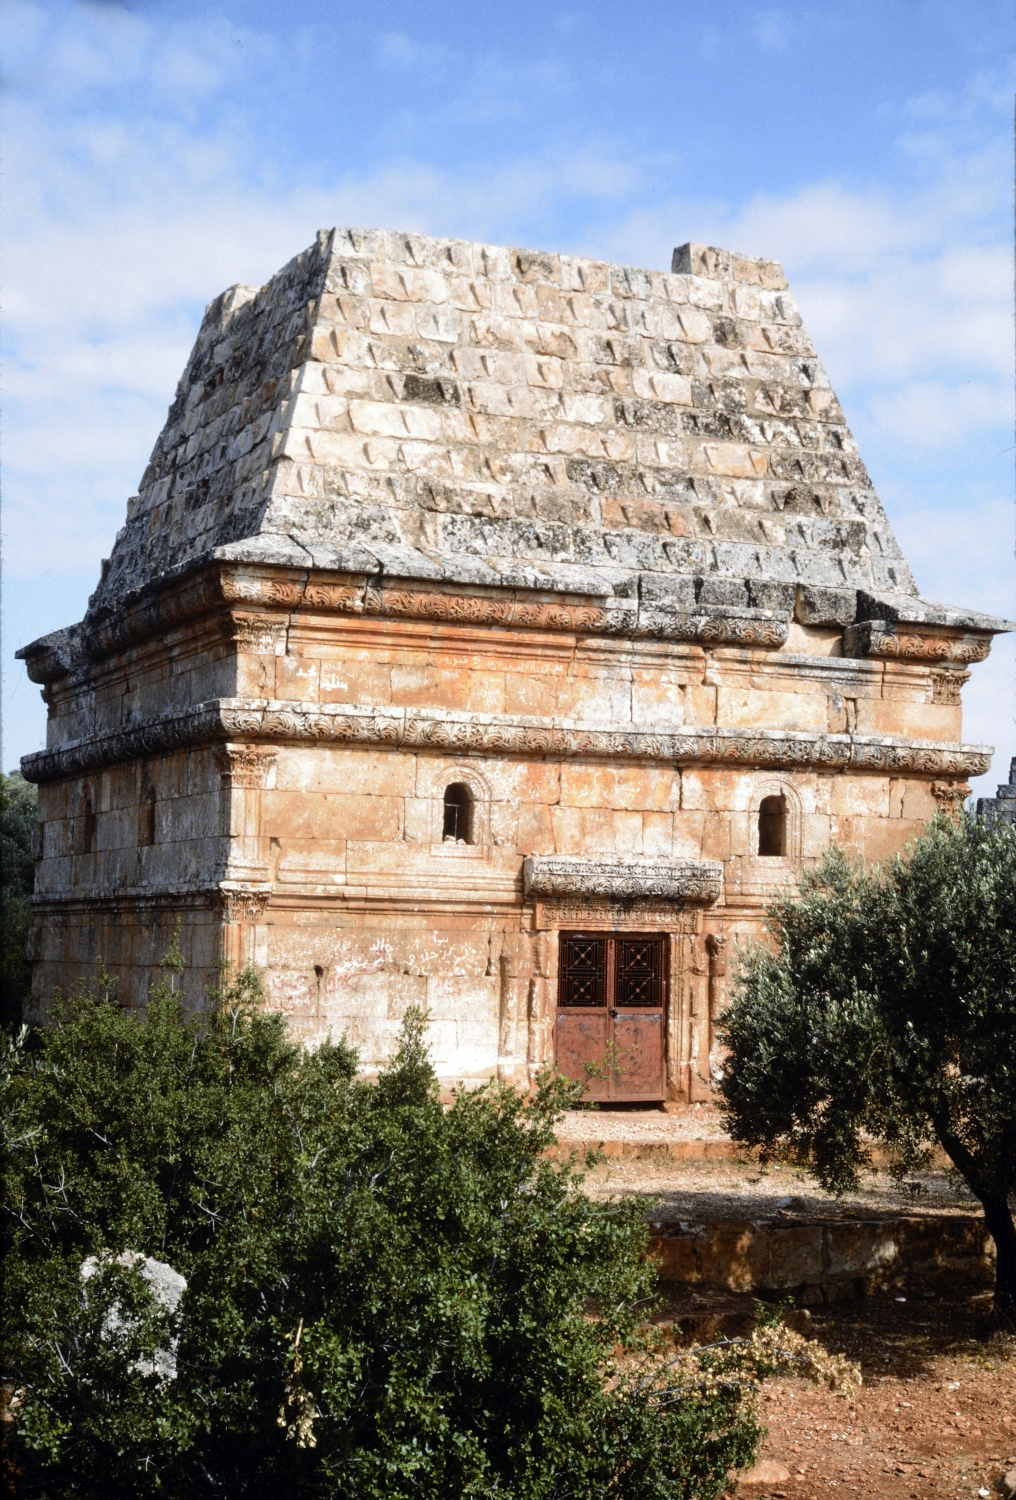 Al-Bara - The larger pyramidal-roofed tomb